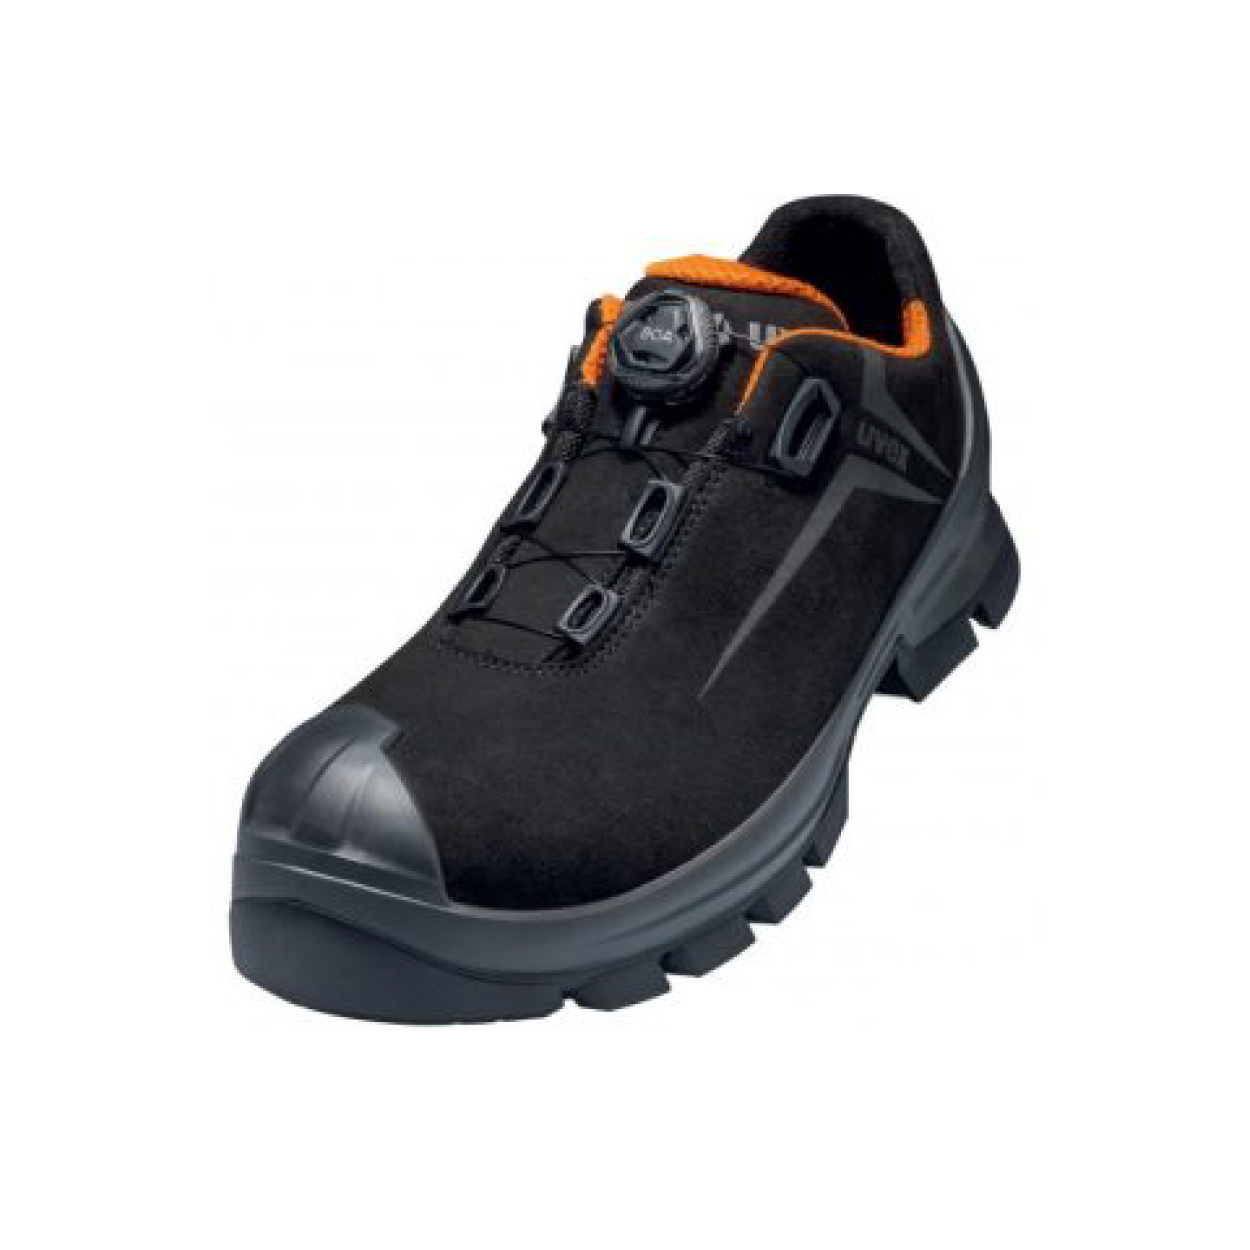 uvex 65332 2 vibram safety shoe s3 BOA low shoe width - Remix ...